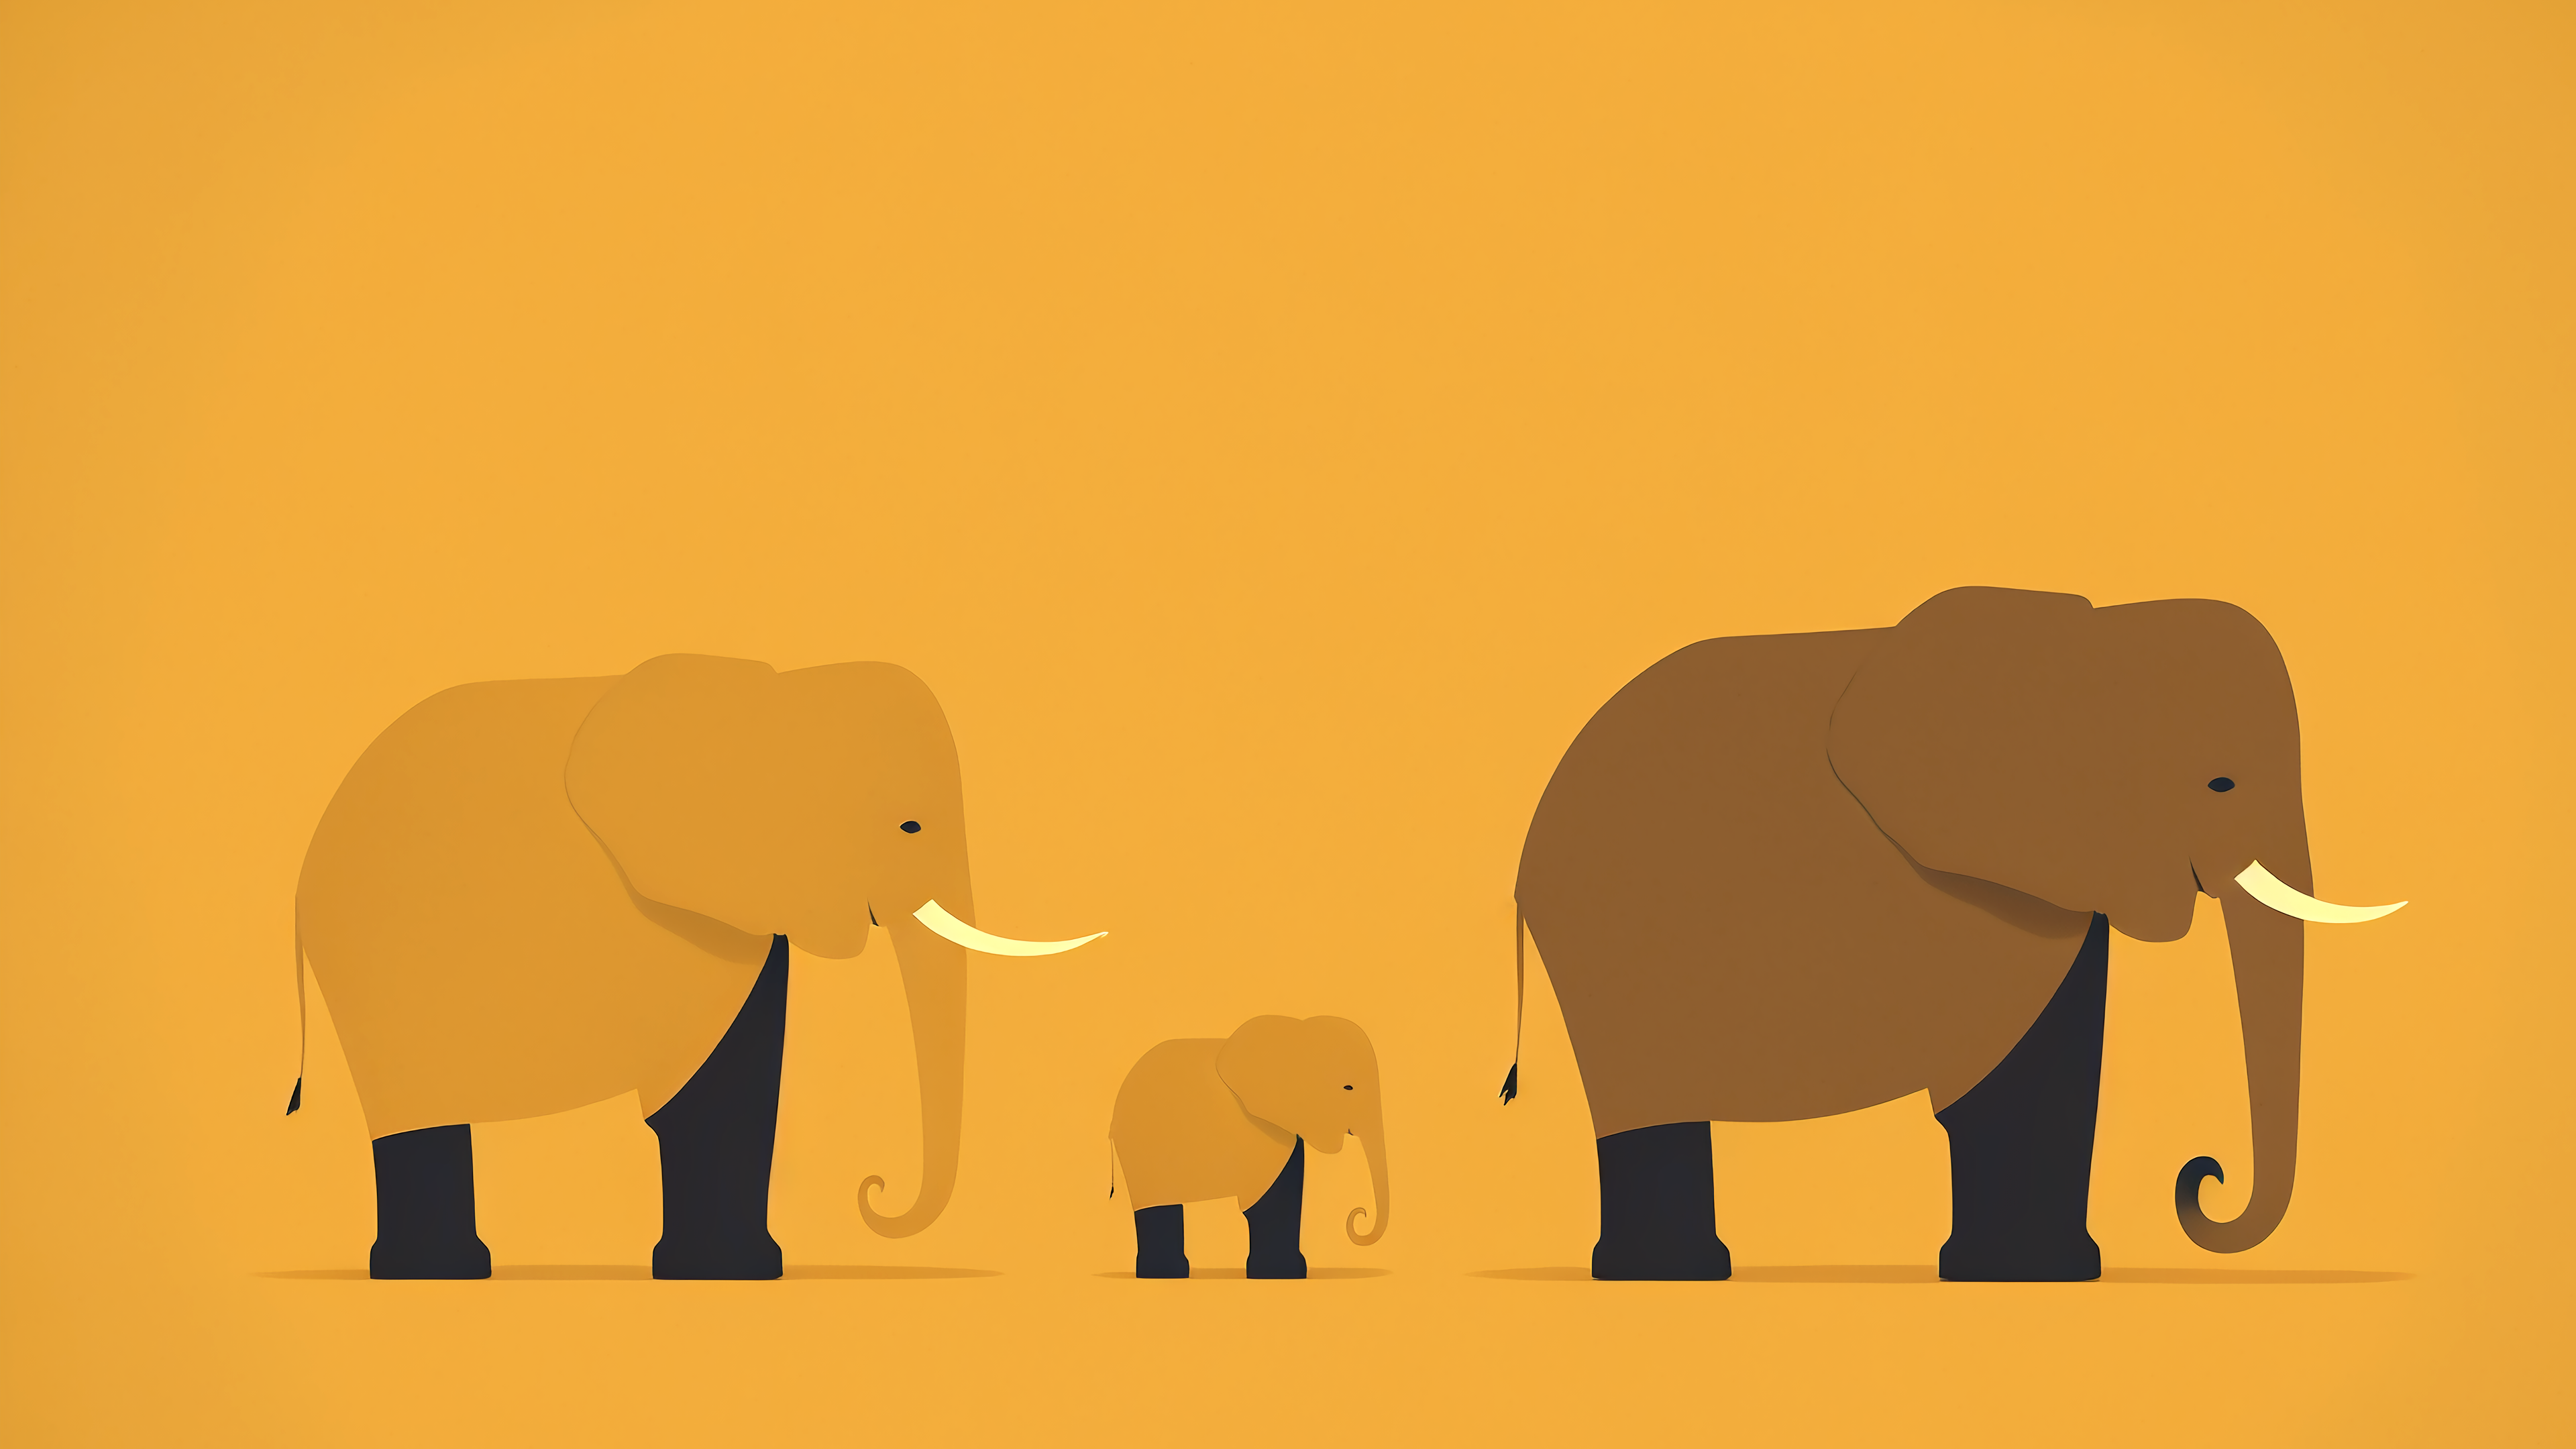 General 3840x2160 minimalism AI art simple background vector animals elephant orange background